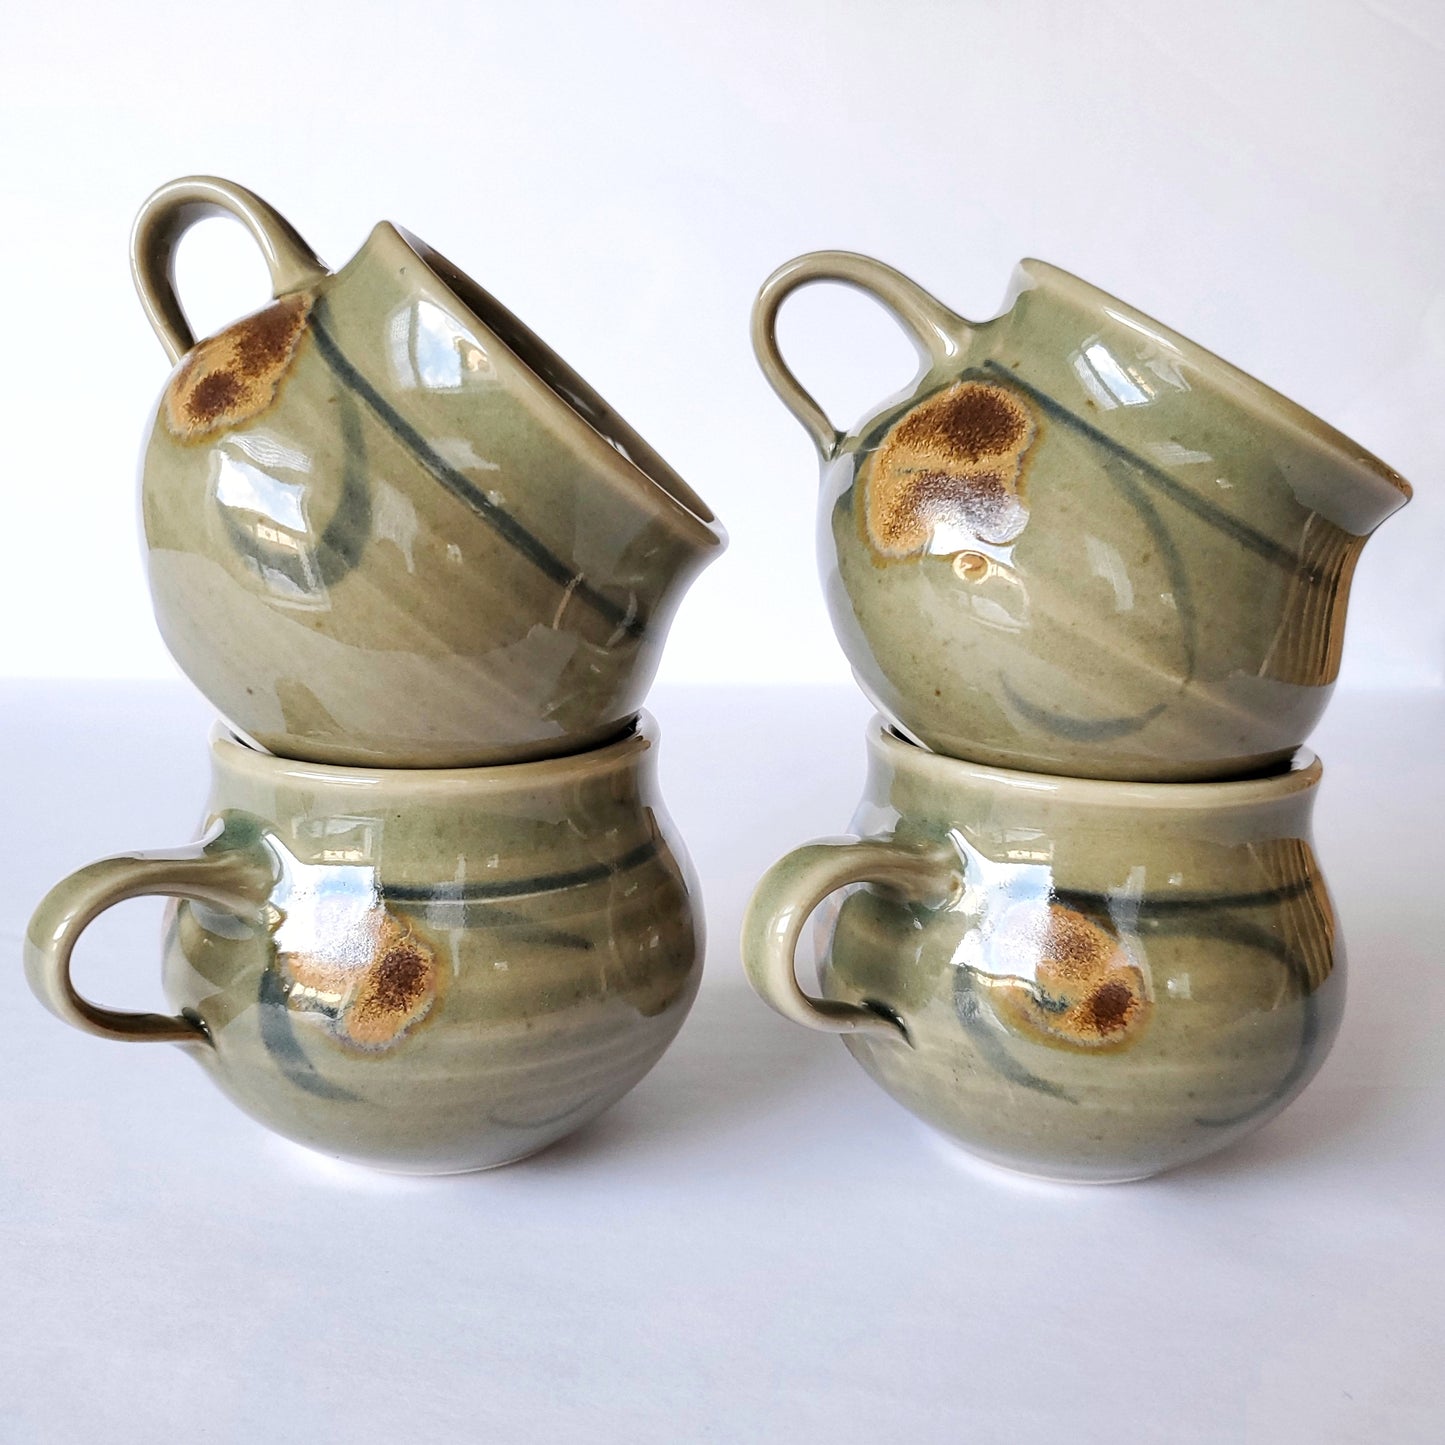 Ceramic mugs - handpainted